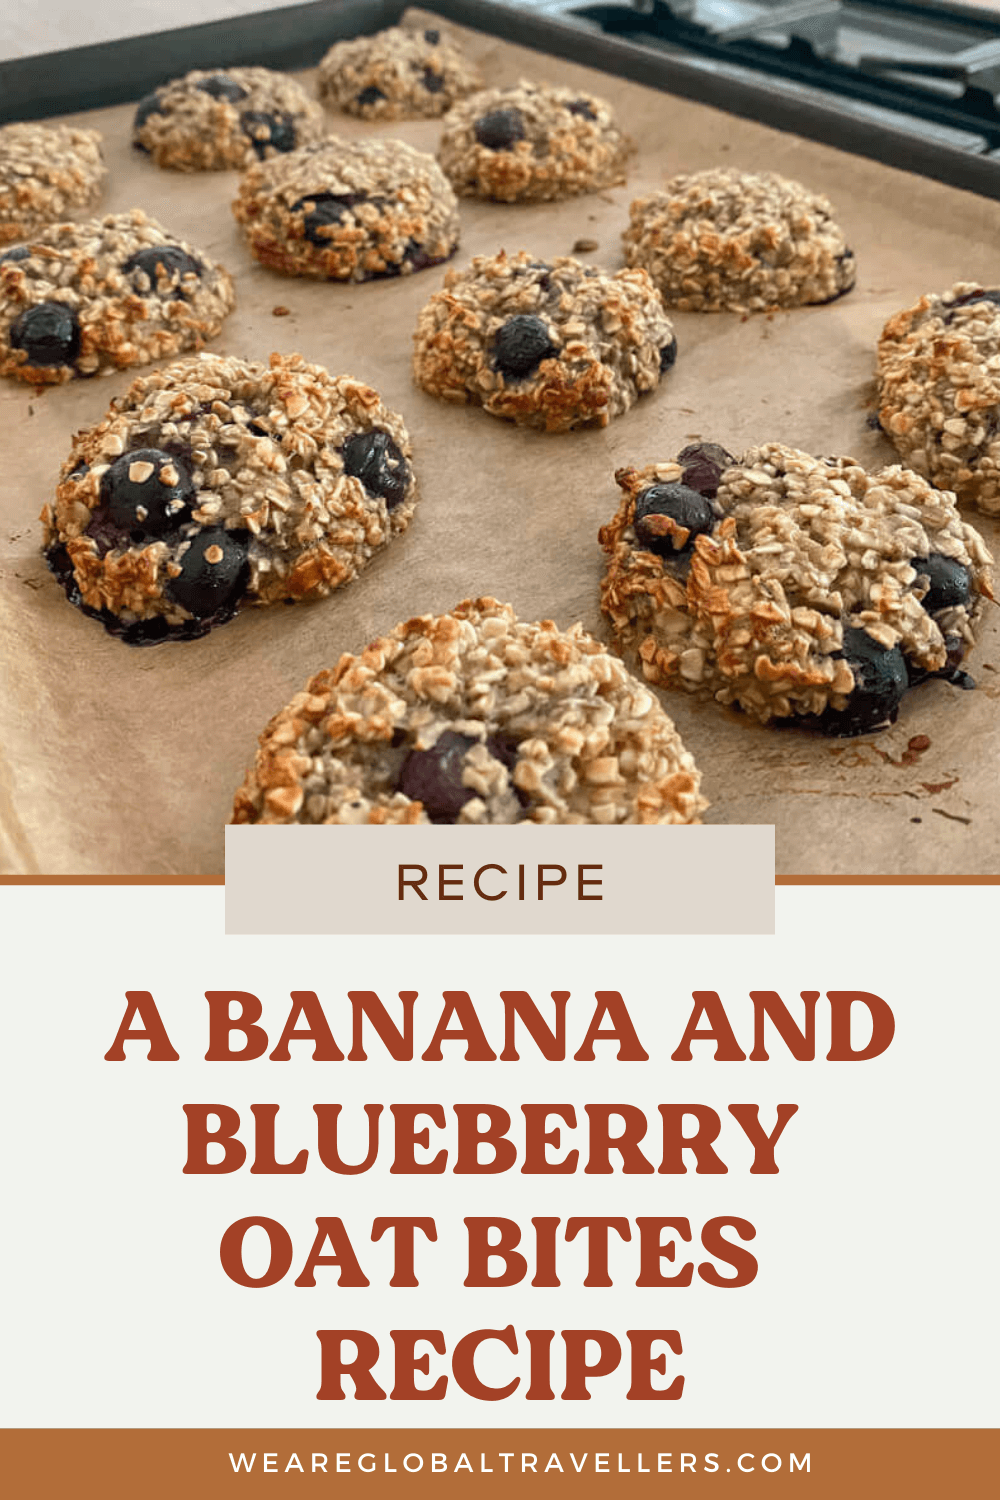 RECIPE: Banana and blueberry oat bites